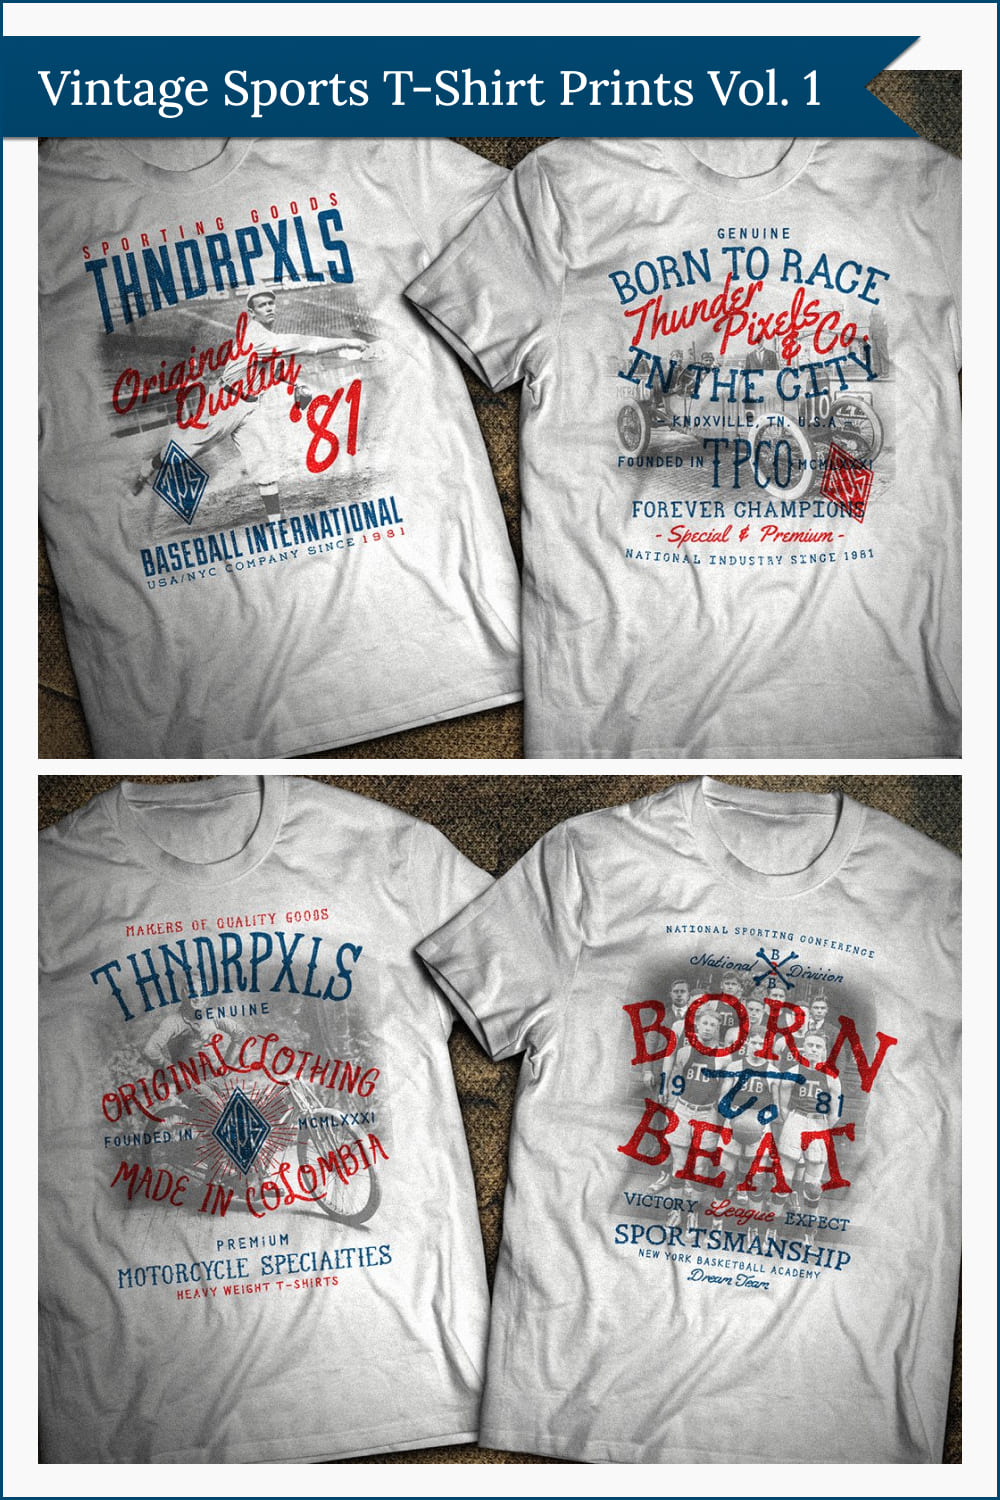 Vintage Sports T-Shirt Prints Vol. 1